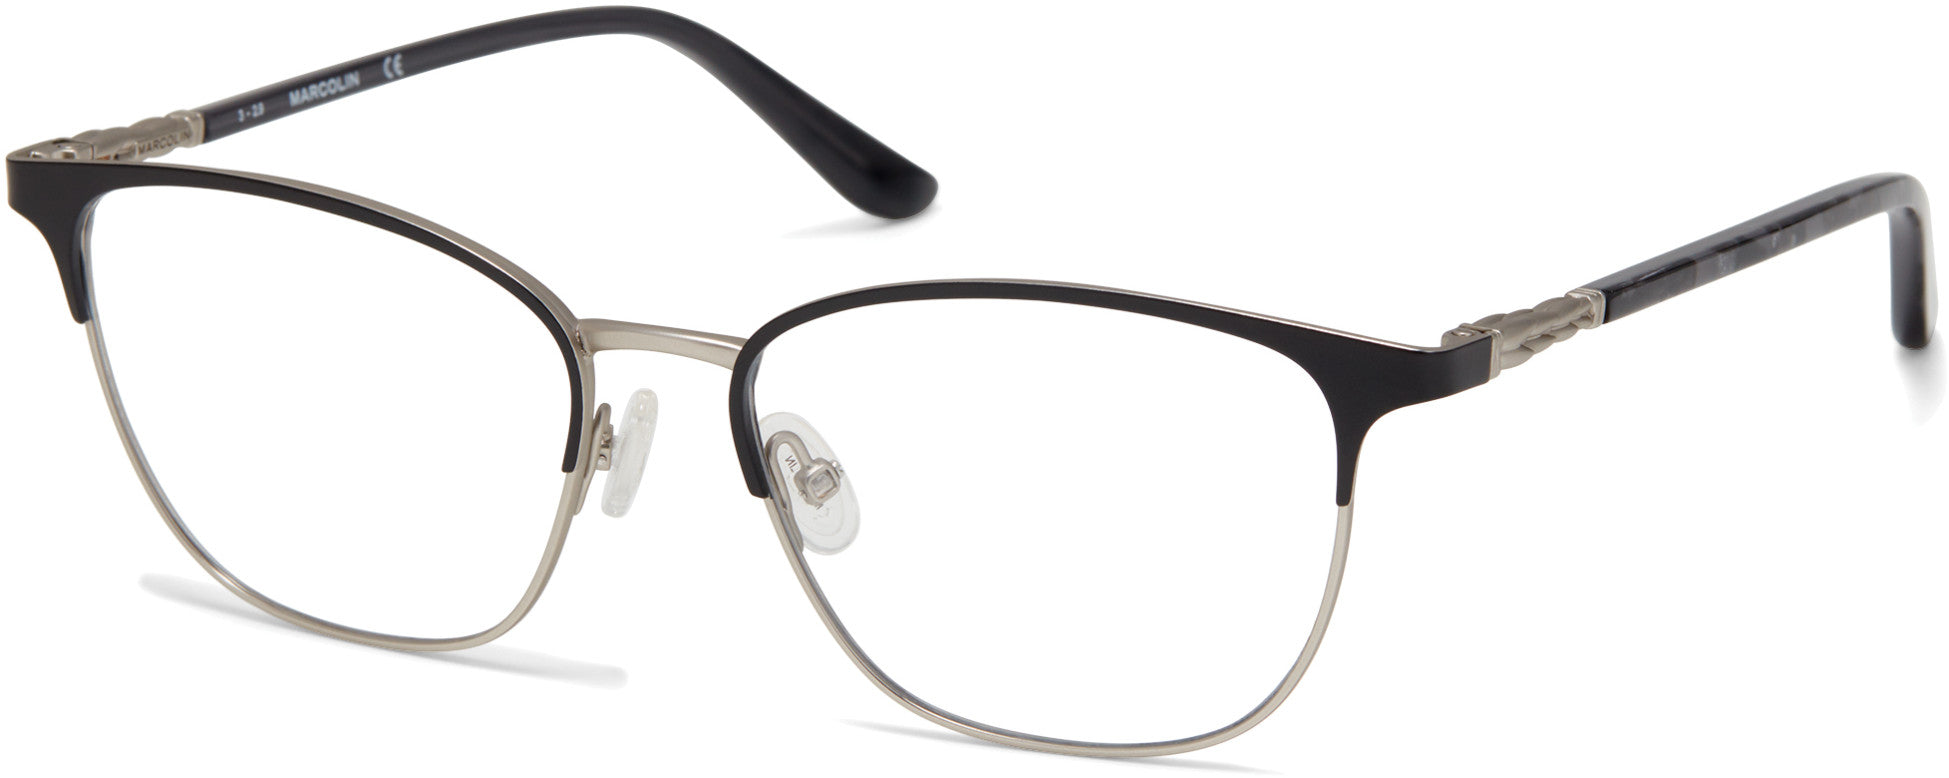 Marcolin MA5023 Square Eyeglasses 002-002 - Matte Black